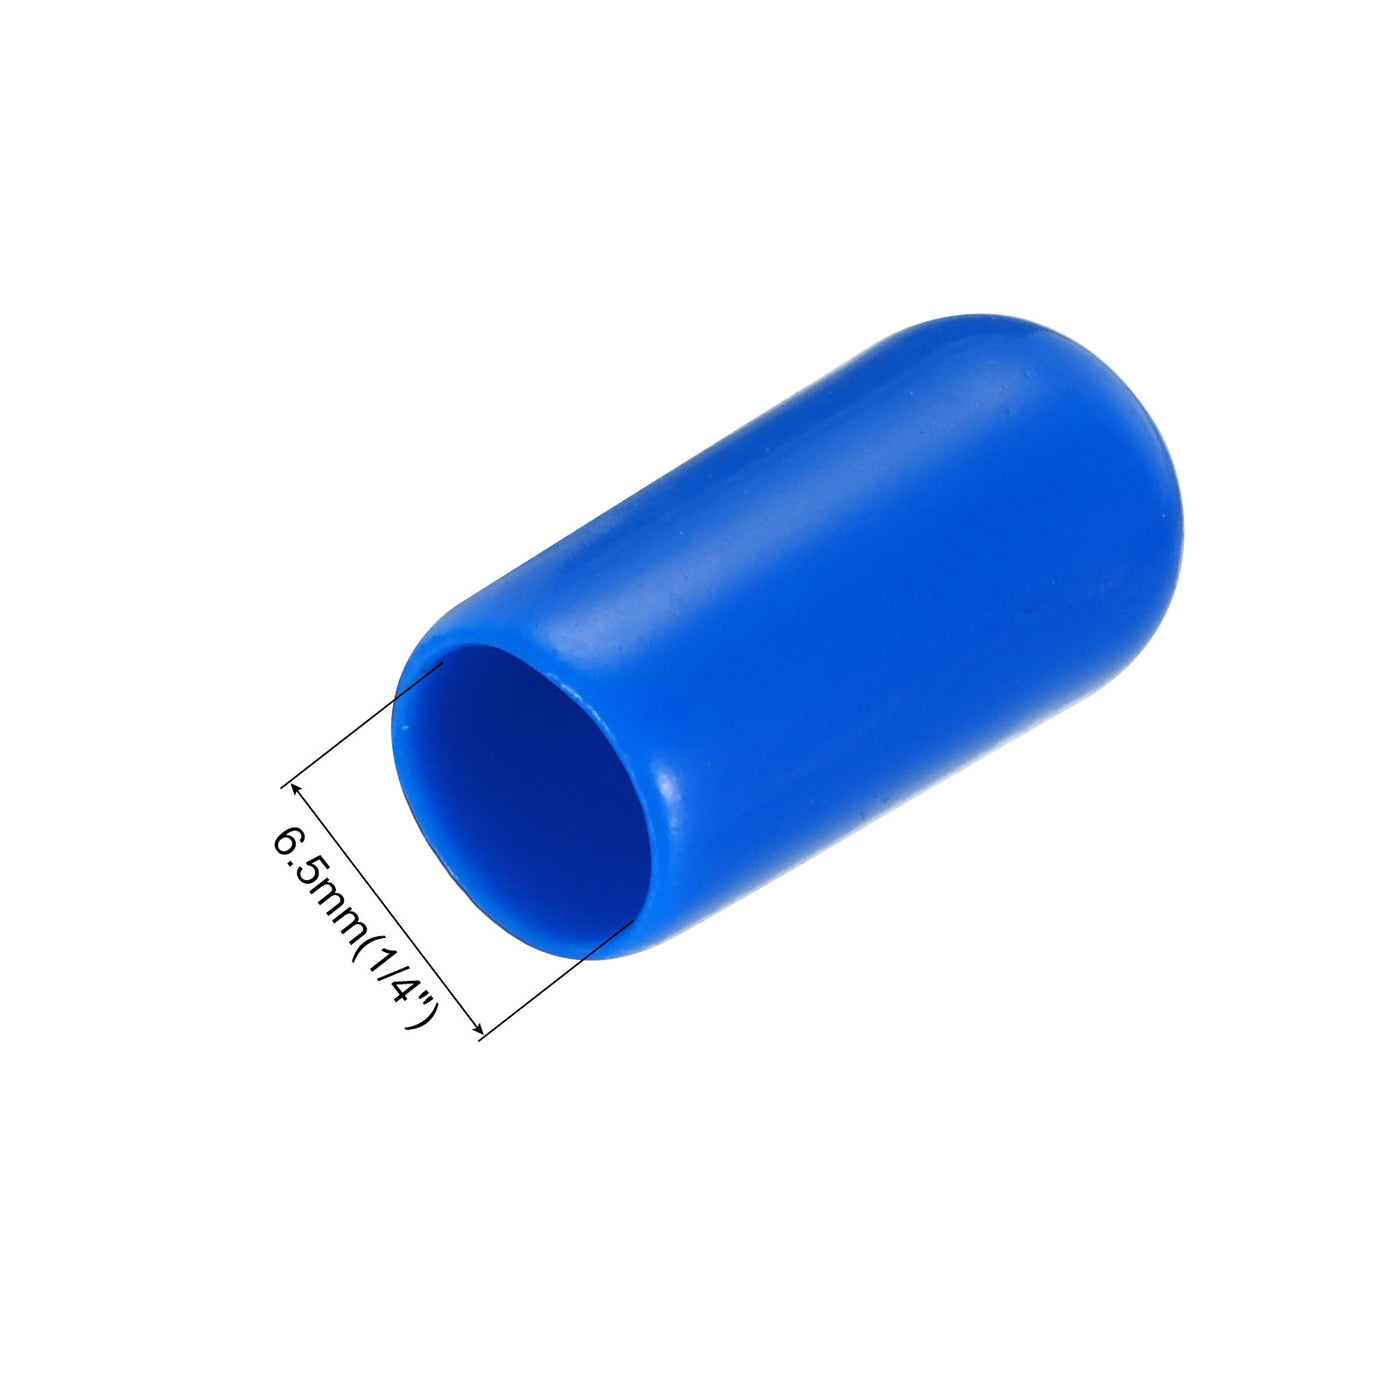 uxcell Uxcell 100pcs Rubber End Caps 6.5mm(1/4") ID Vinyl PVC Round Tube Bolt Cap Cover Screw Thread Protectors Blue